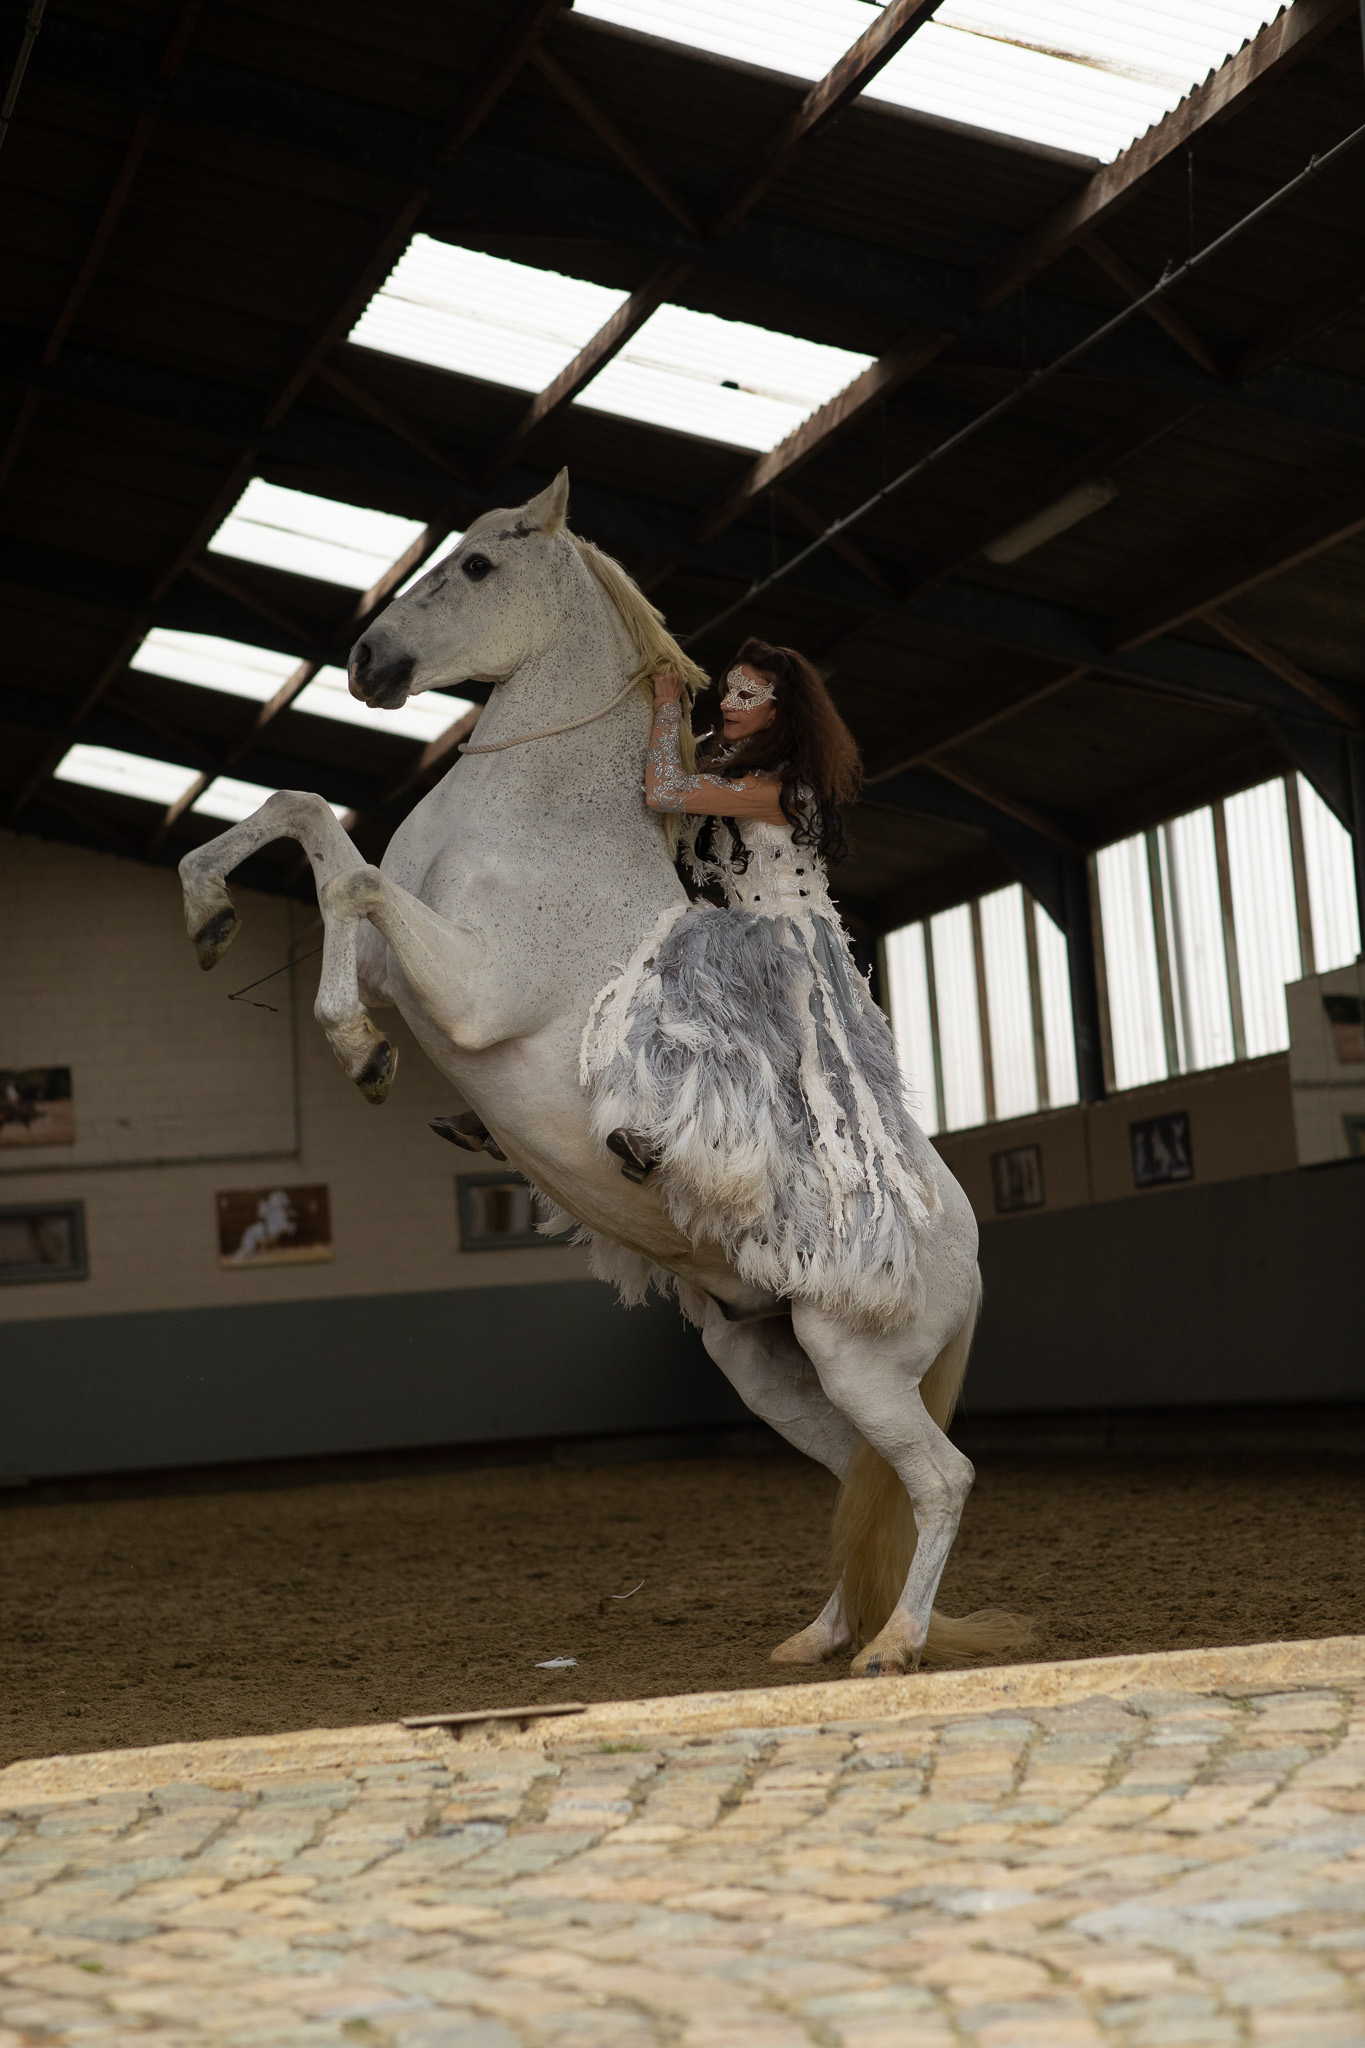 pranching white horse alizee fromant laura dijkslag fotografie before photoart heerde